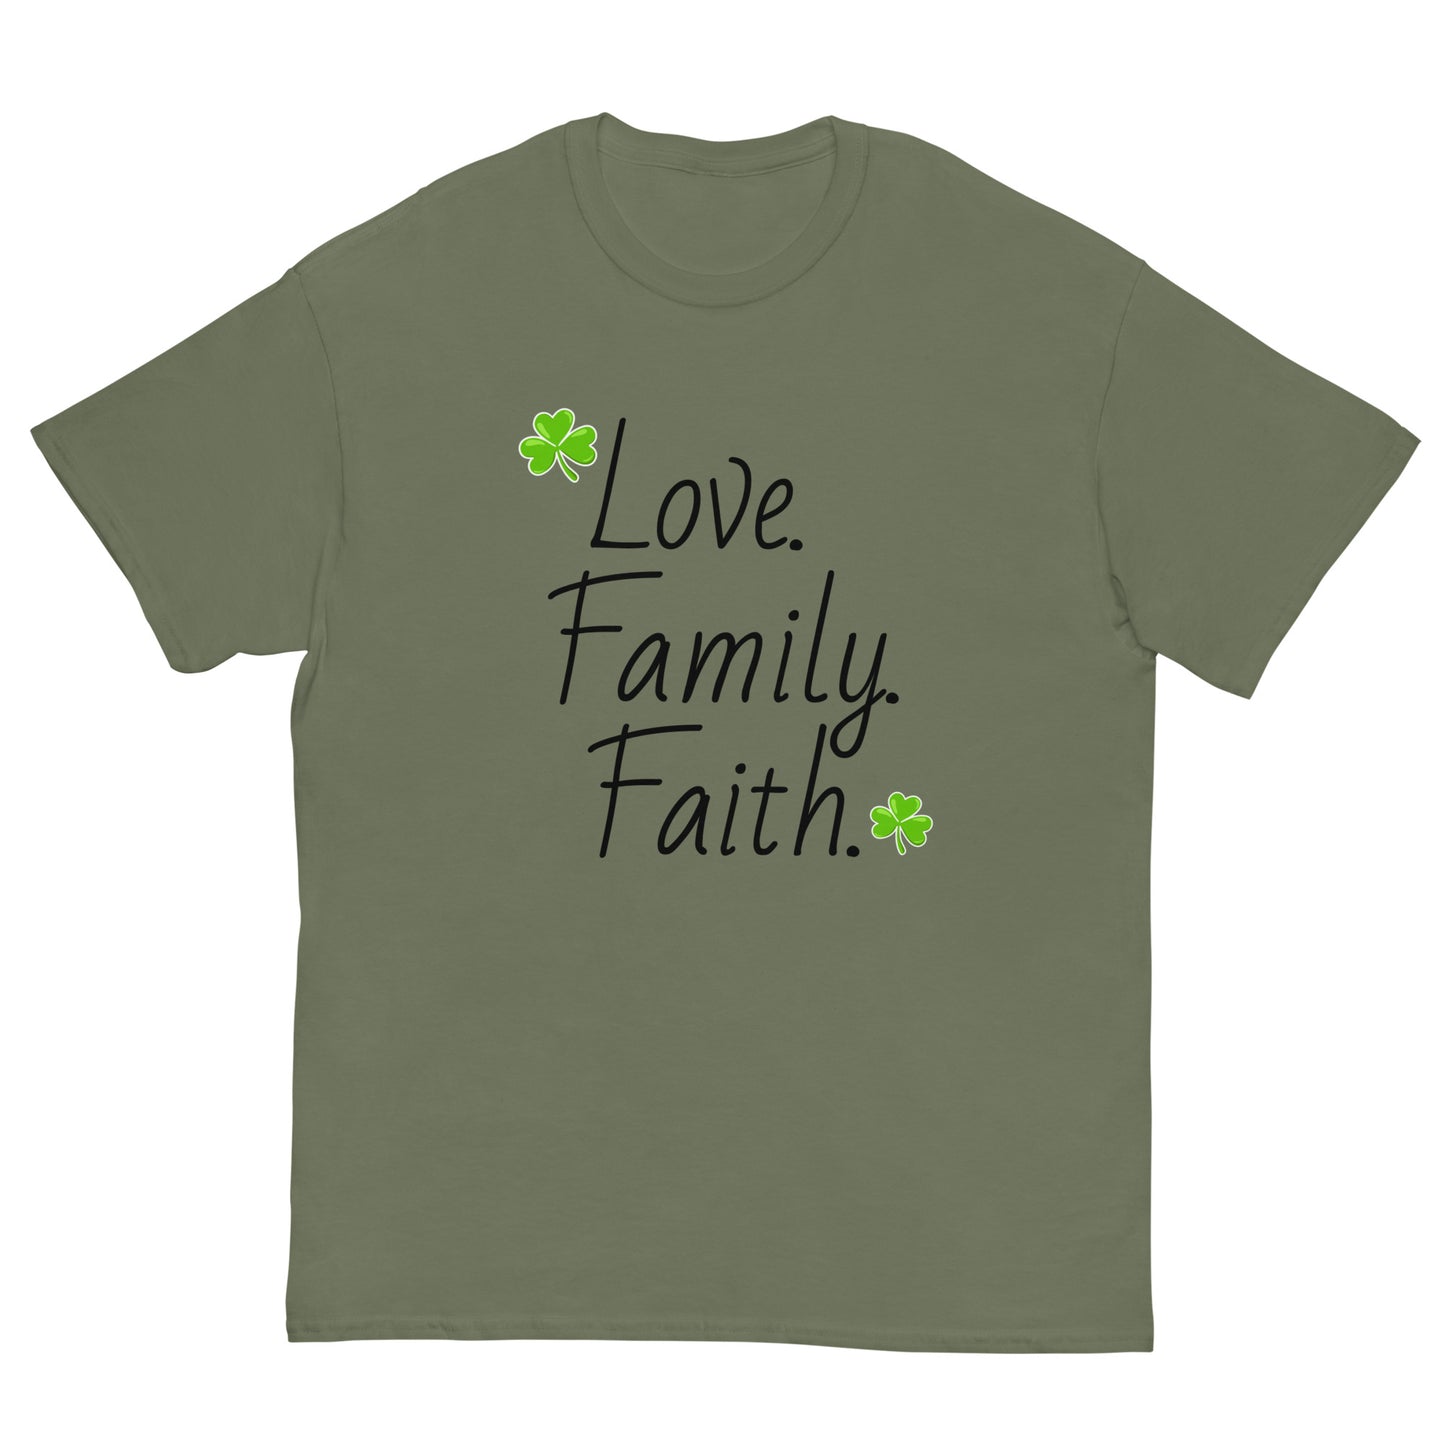 Love, Family, Faith Classic tee (Black lettering)